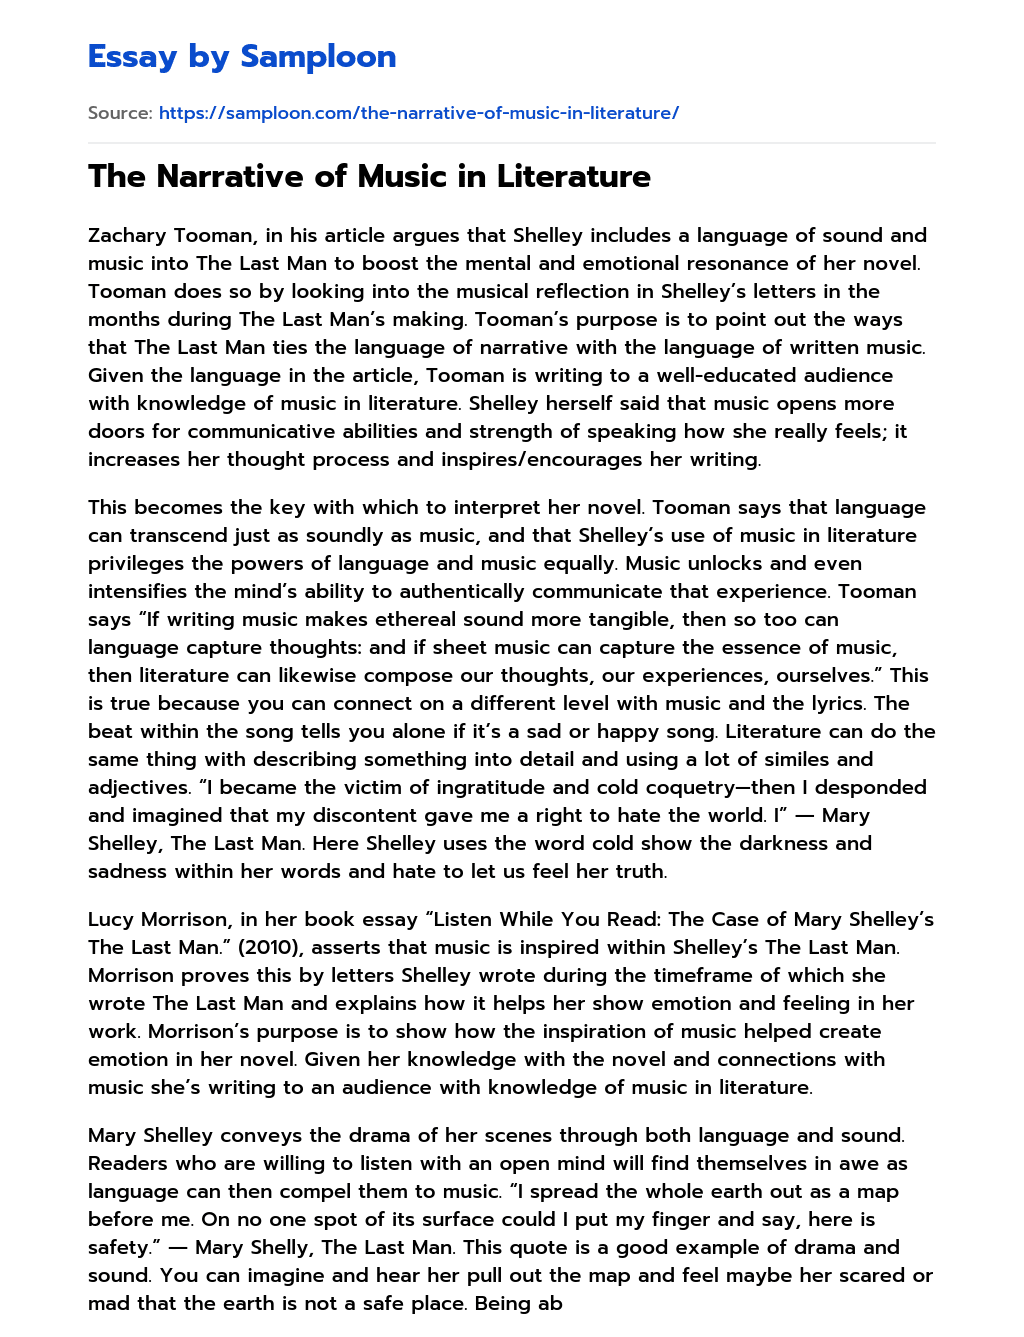 The Narrative of Music in Literature essay